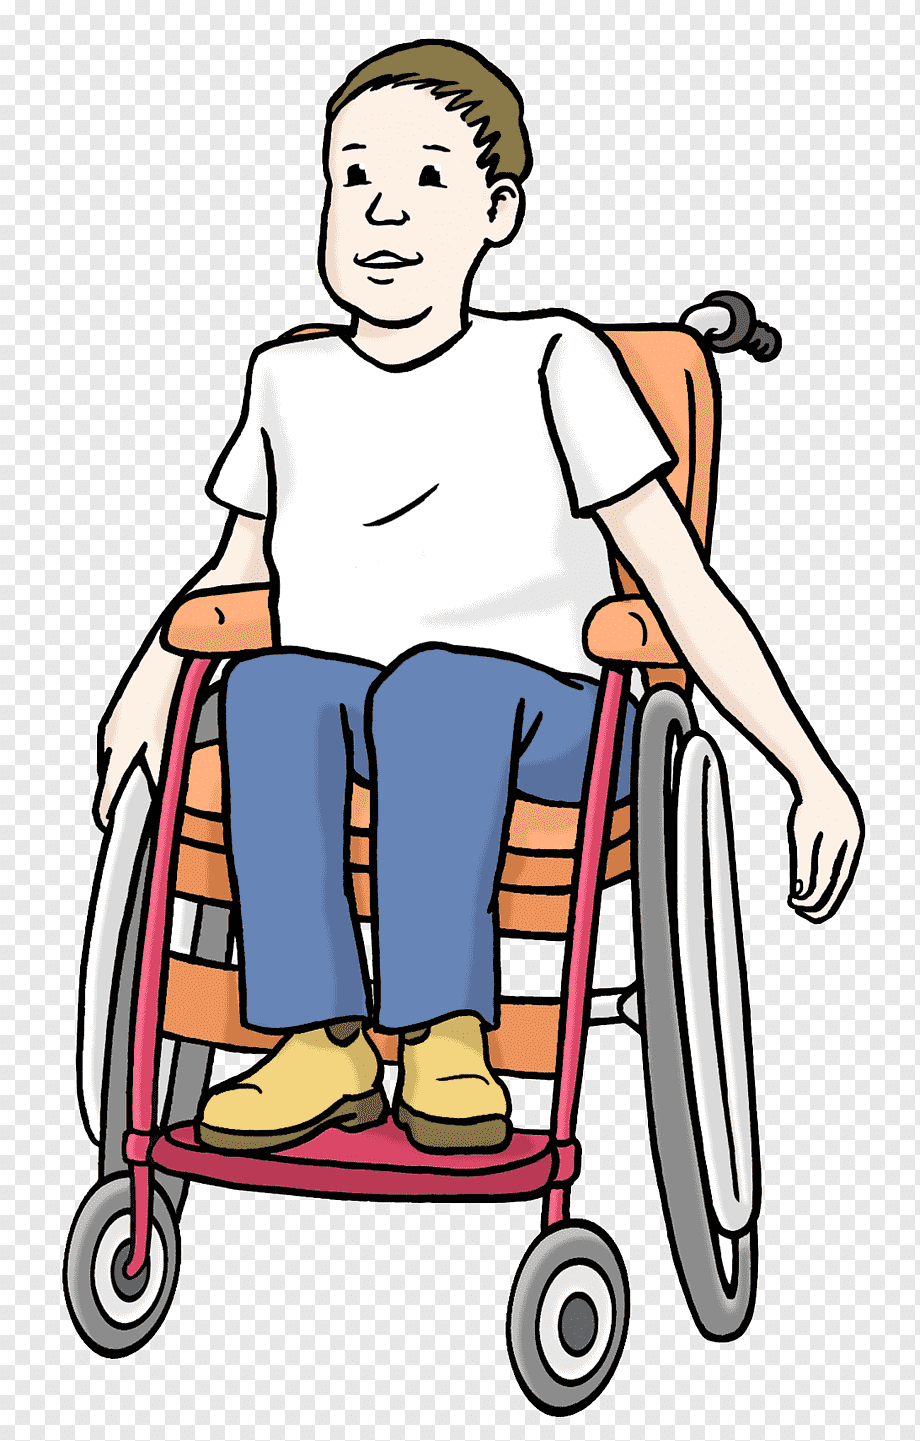 Kid in Wheelchair Clipart Free